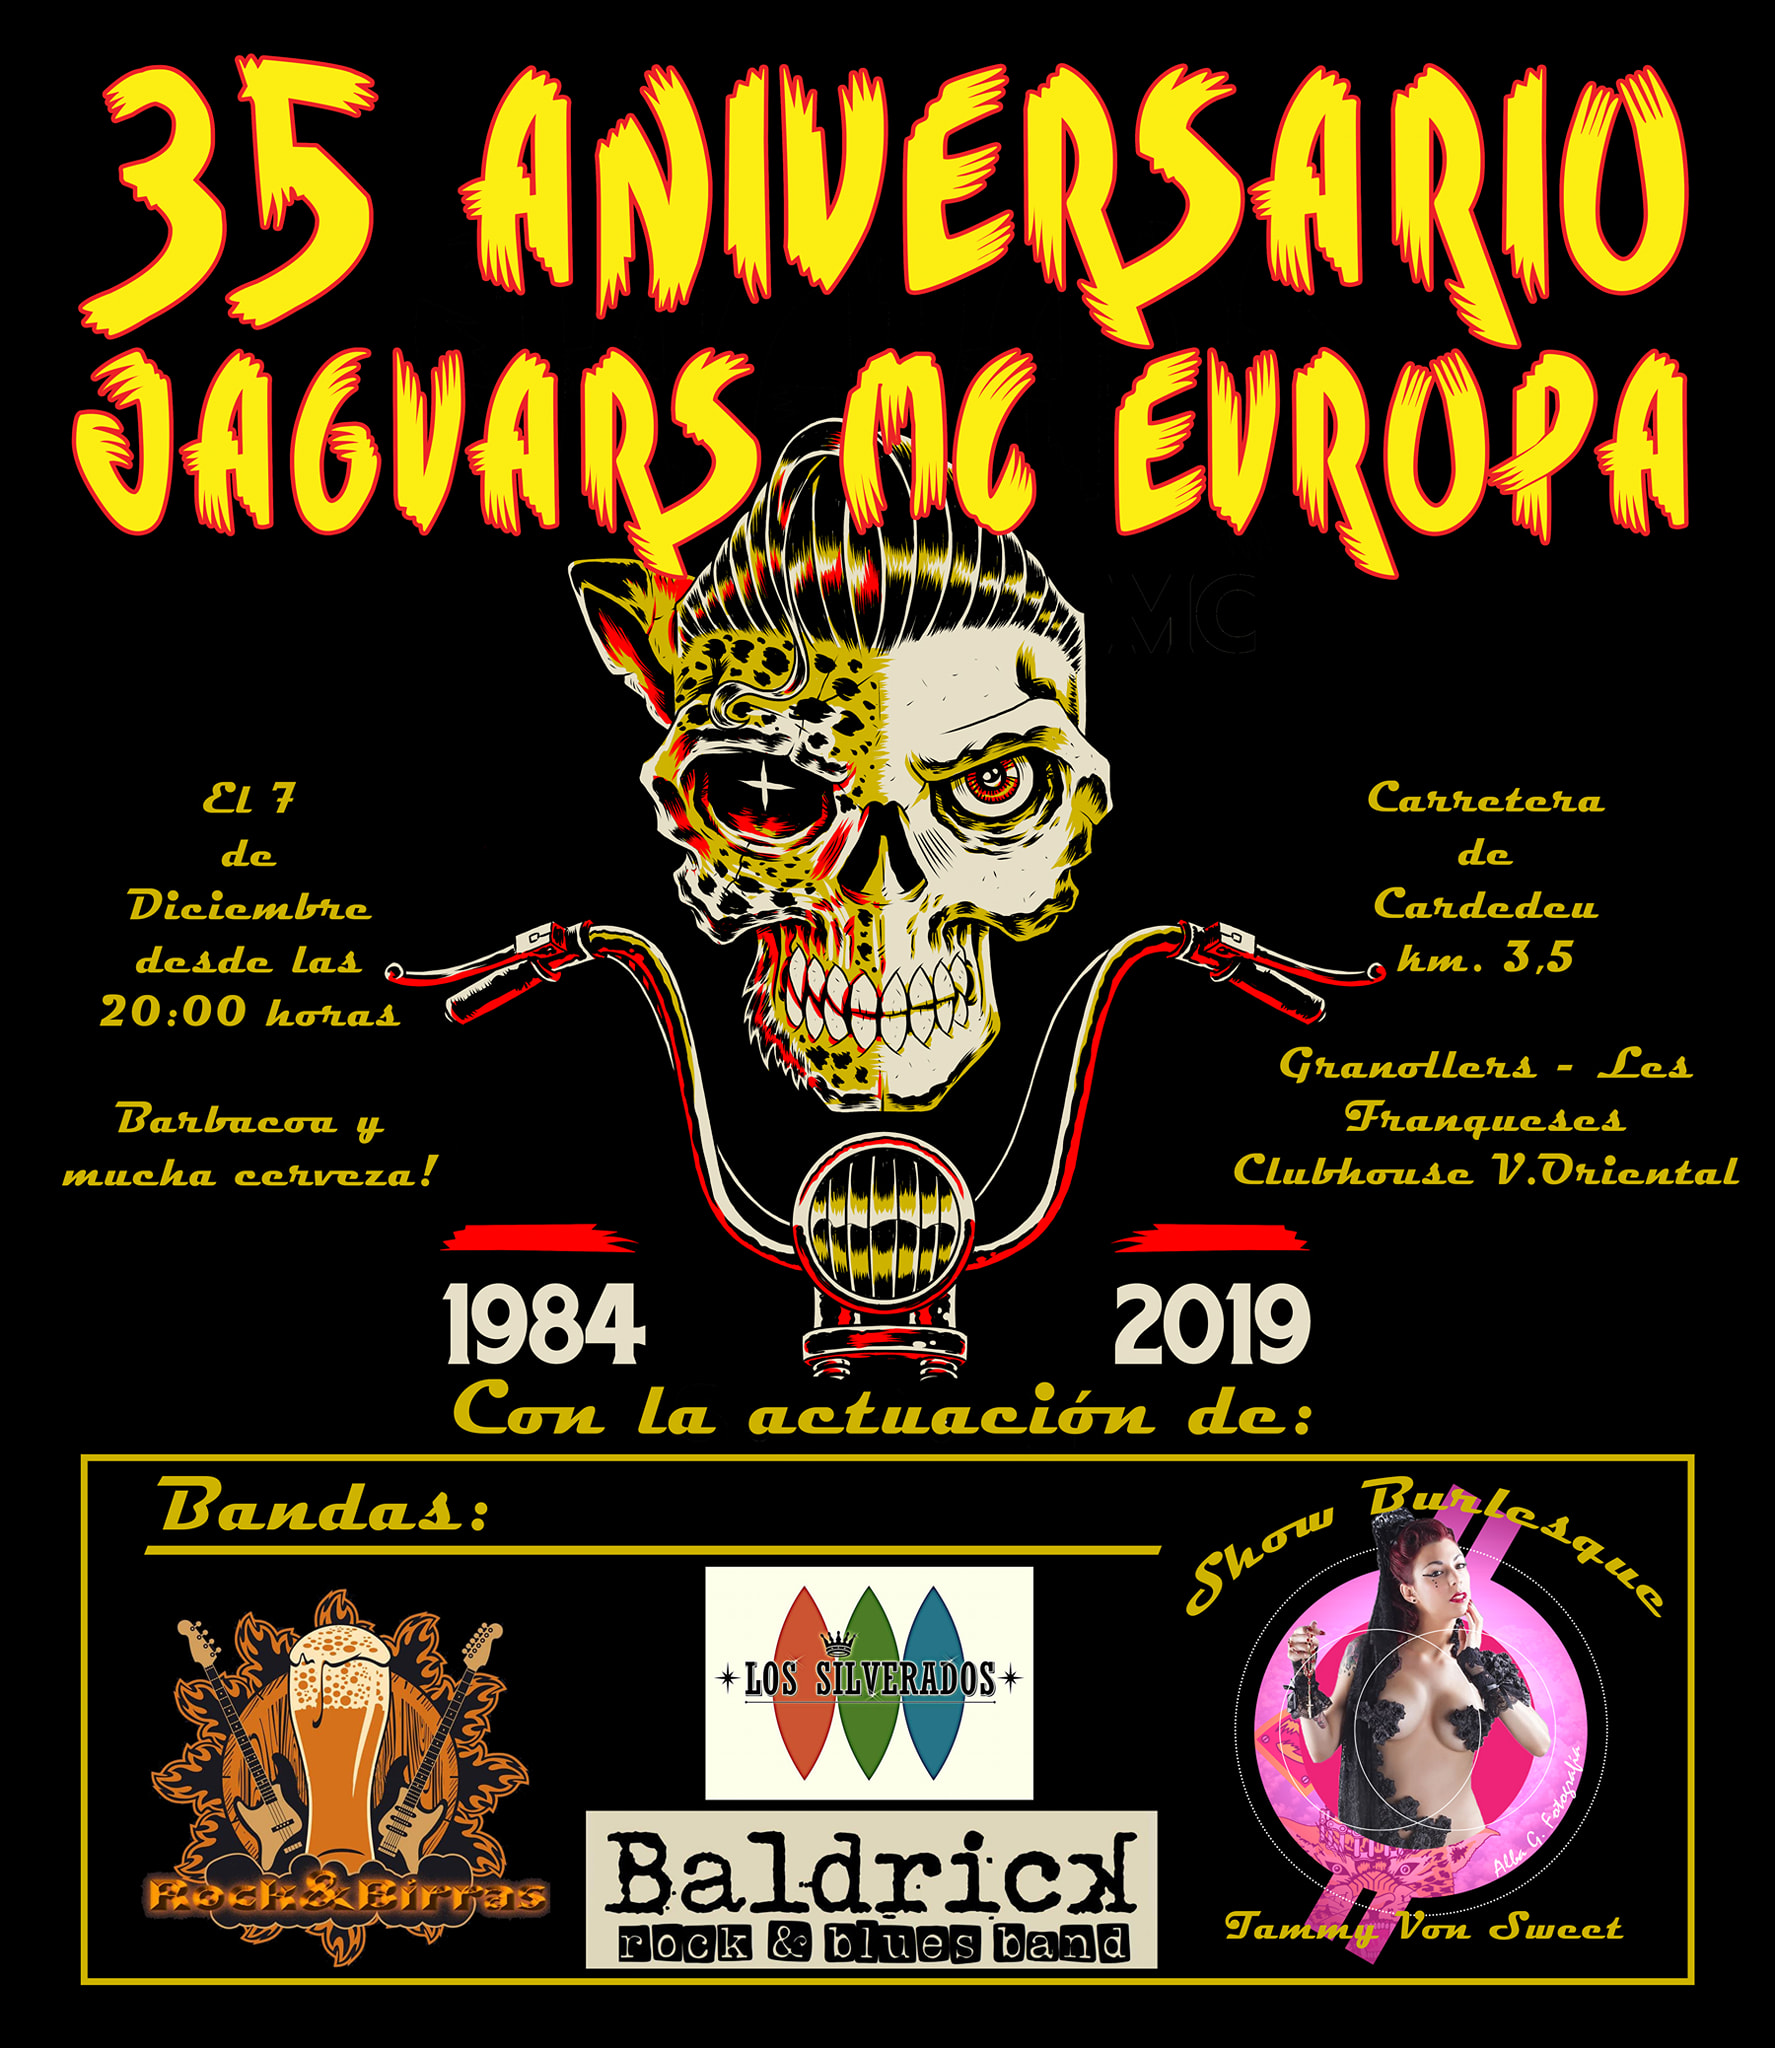 35-aniversario-jaguars-mc-europa